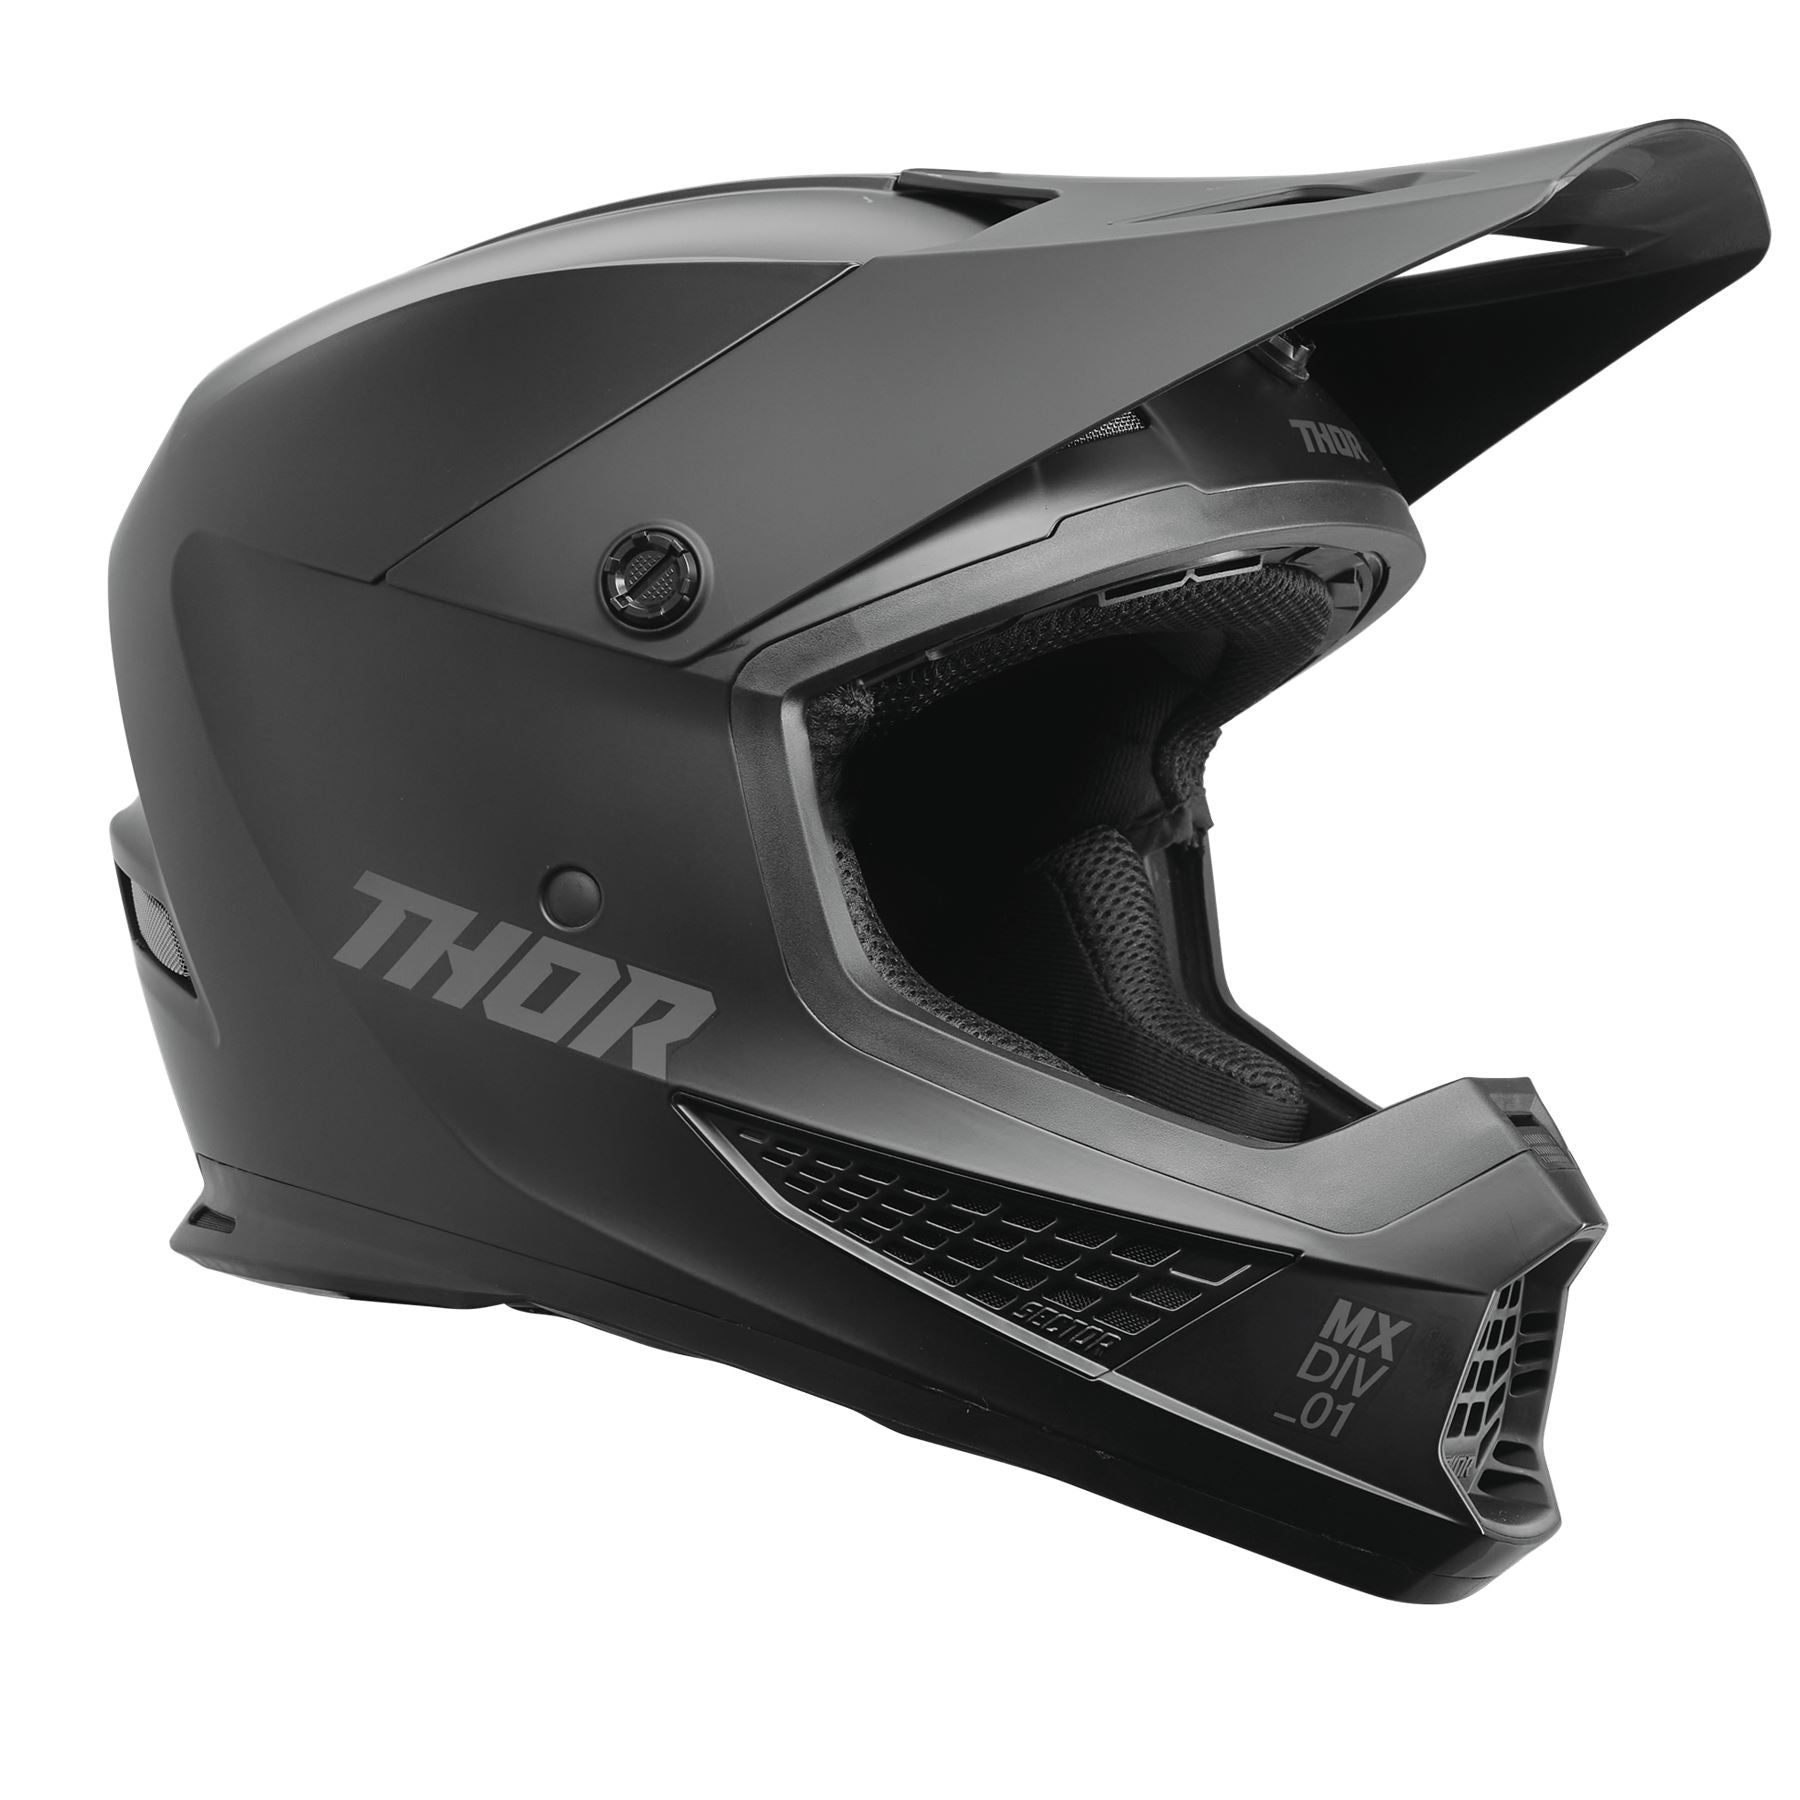 Thor Motocross Helmet Sector 2 Blackout Solid Black